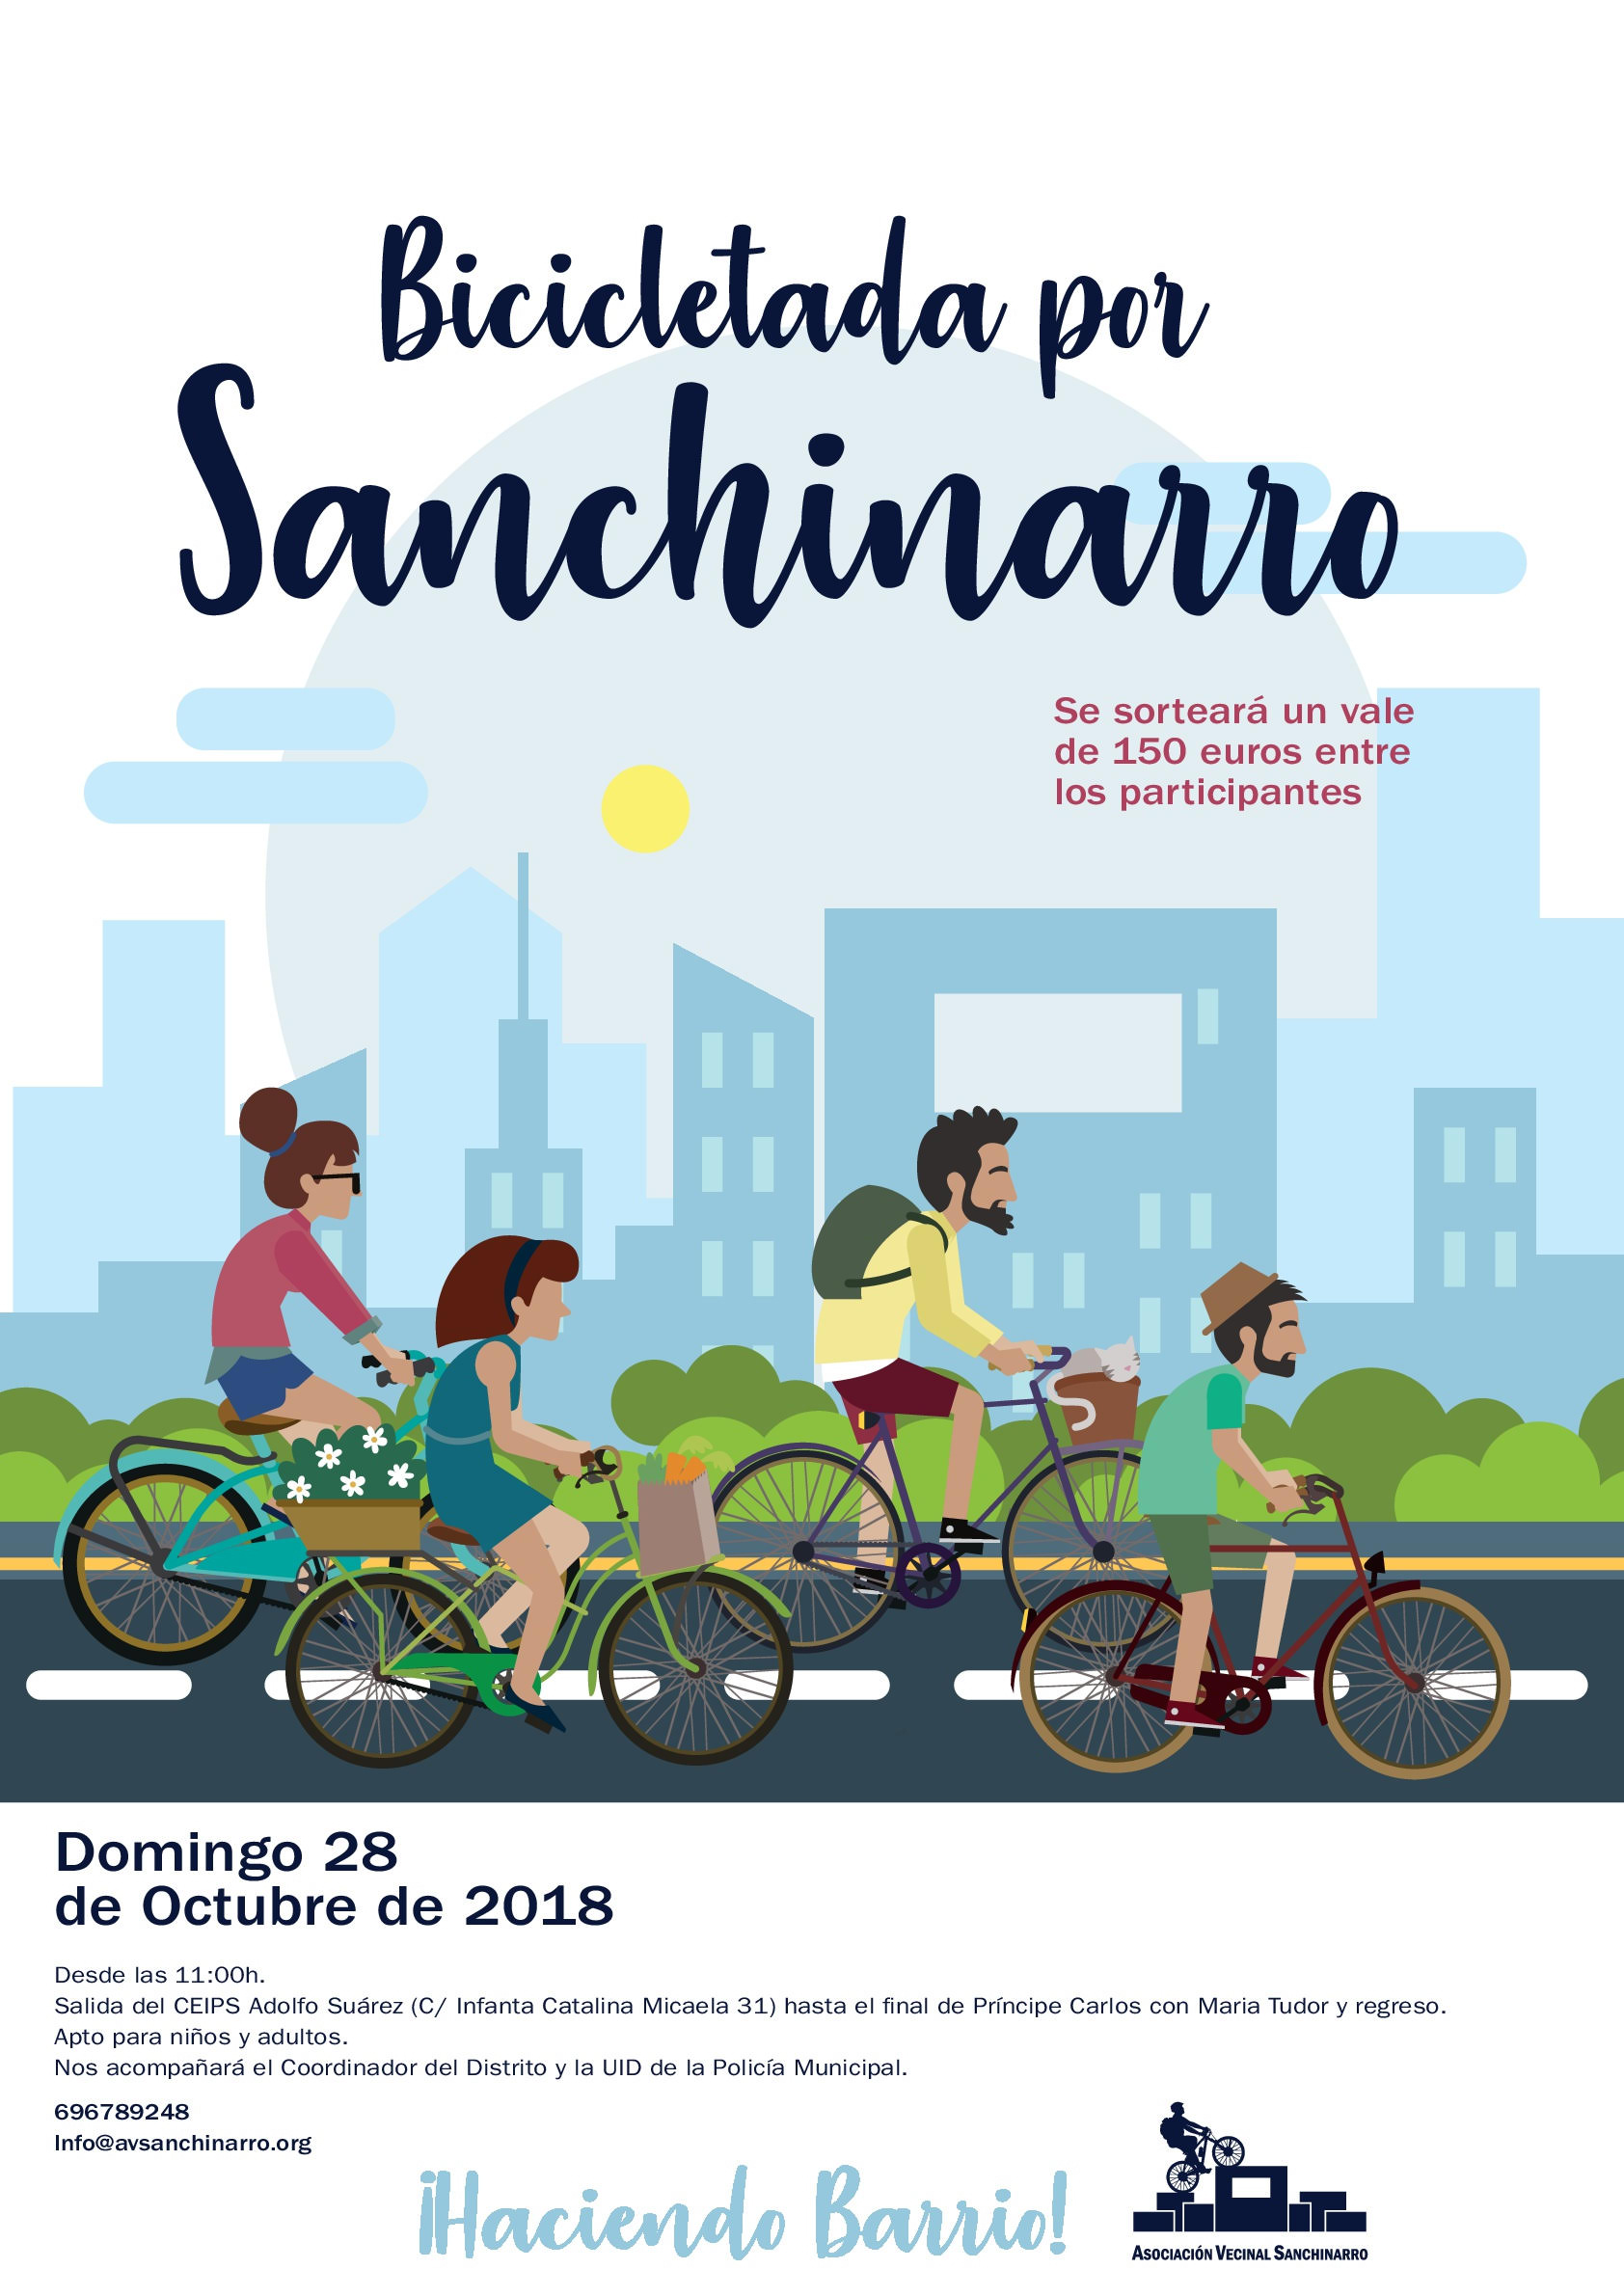 Bicicletada Sanchinarro